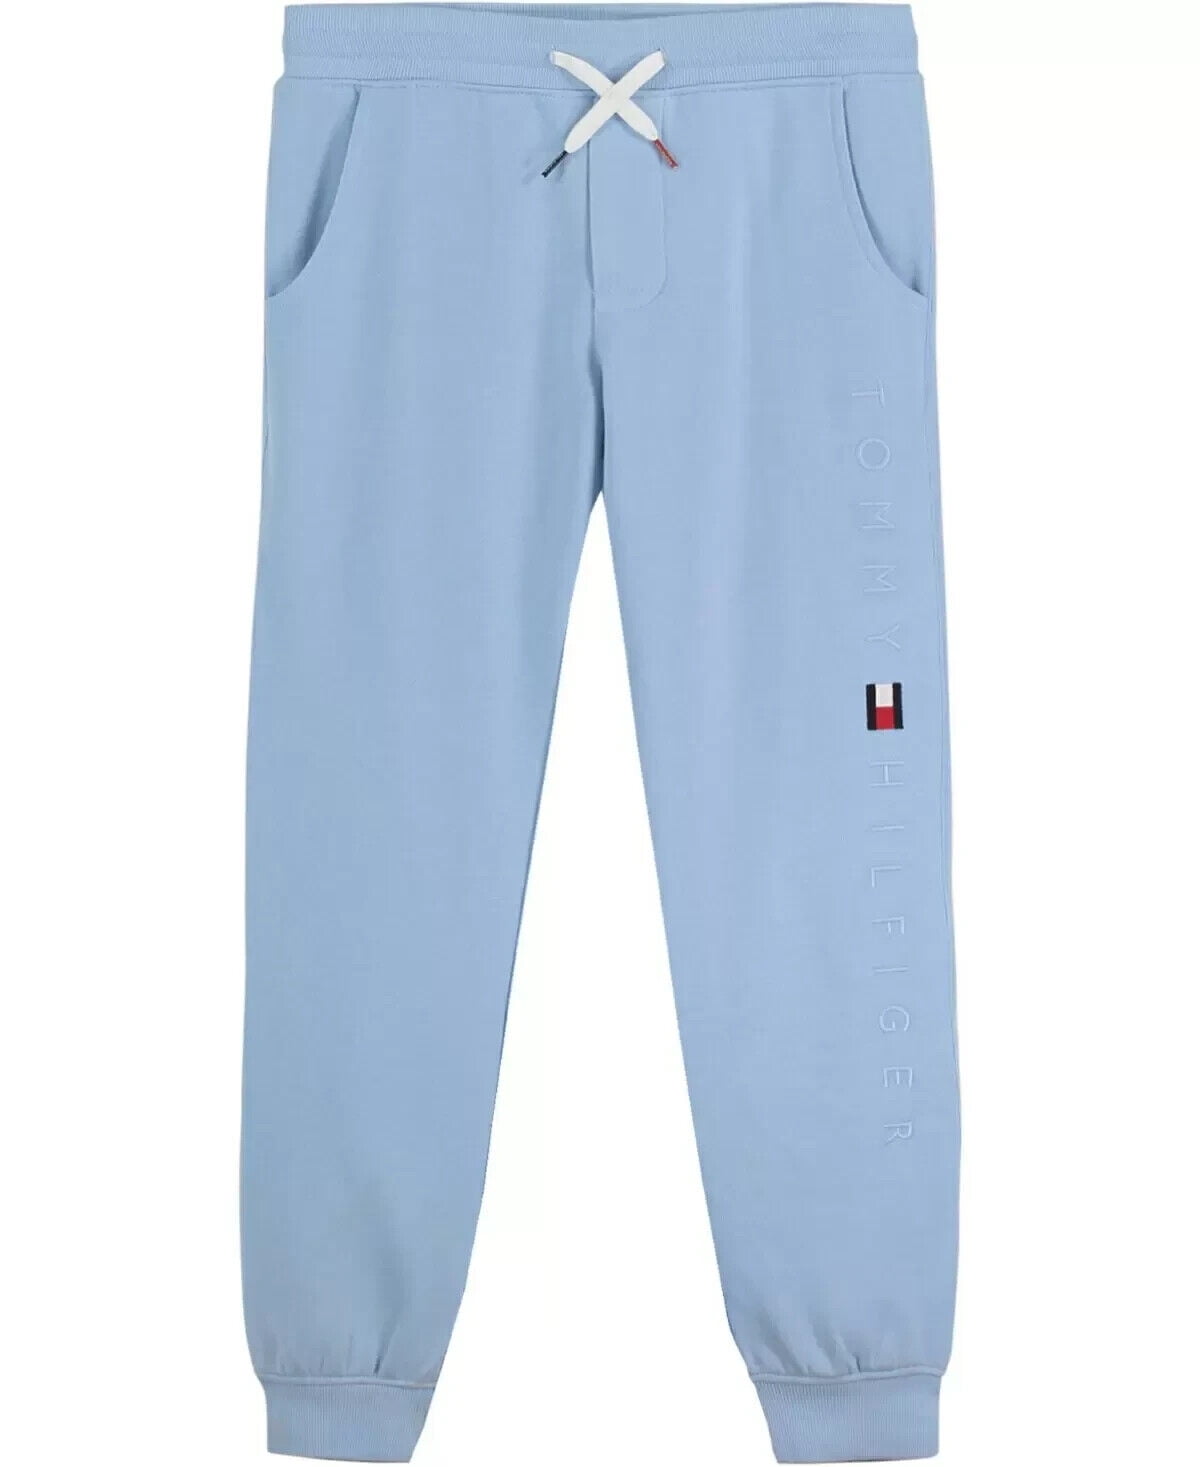 TOMMY HILFIGER Big Boys Classic Logo Sweatpants light Blue Size XL (20)  MSRP $45